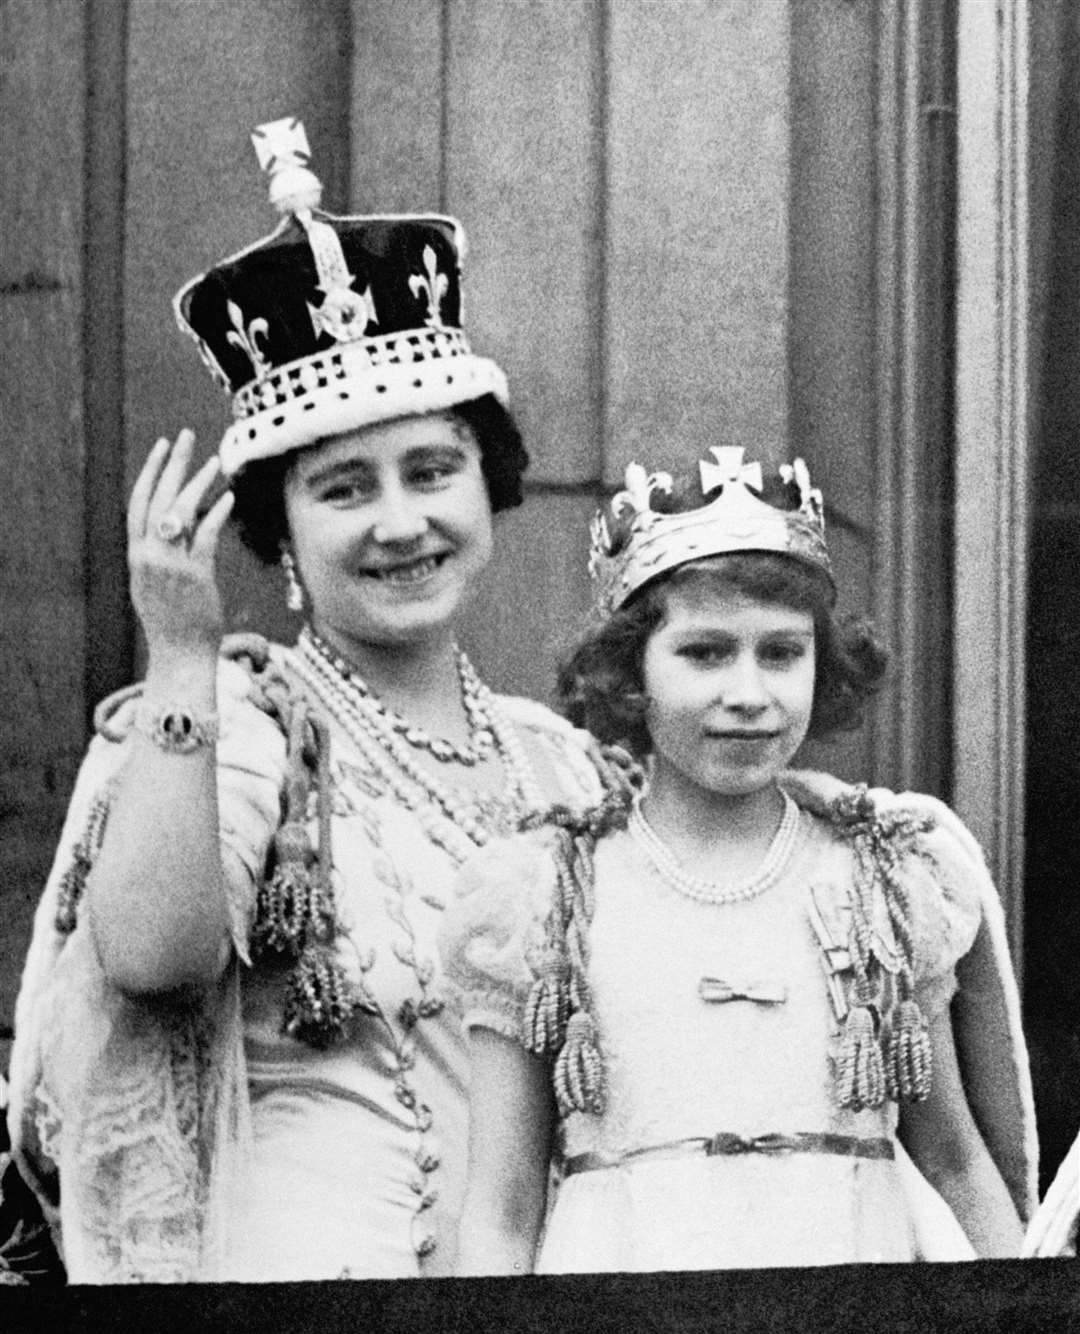 Queen Elizabeth (later the Queen Mother) with her eldest daughter Princess Elizabeth (later Queen Elizabeth II) on coronation day in 1937 (PA)